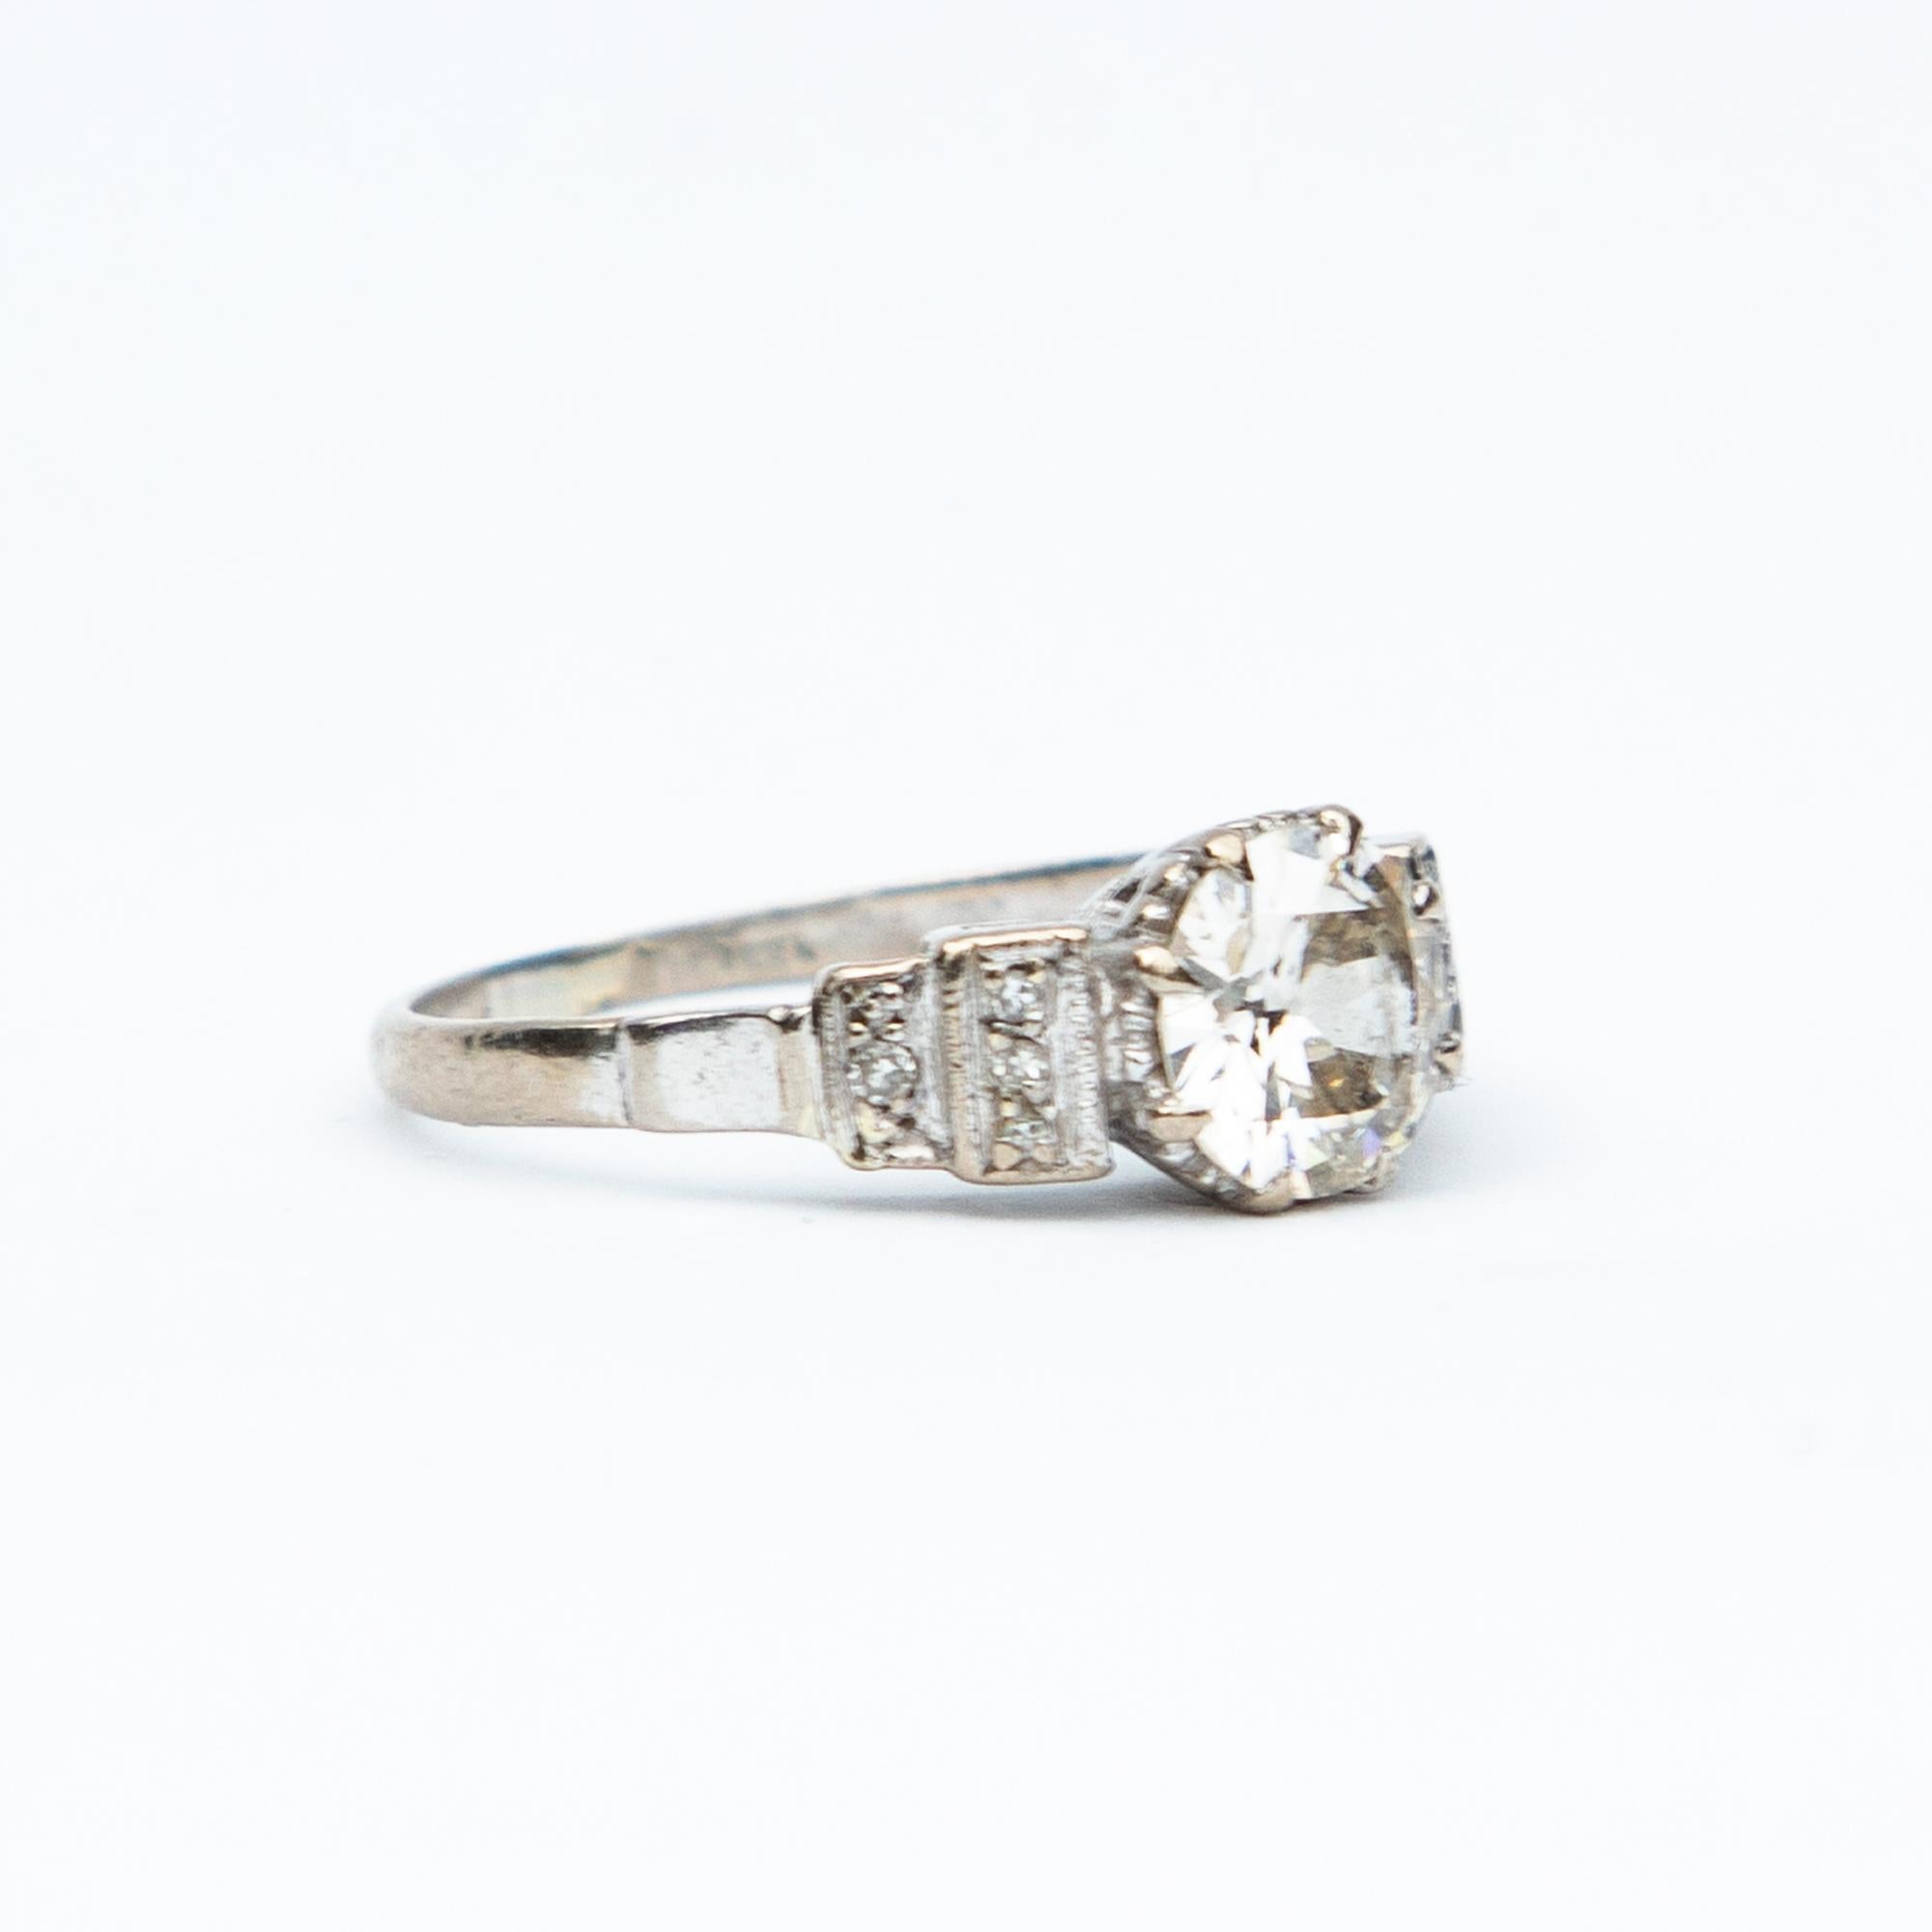 Cushion Cut Art Deco Certified 1.65 Carat Diamond Solitaire Ring